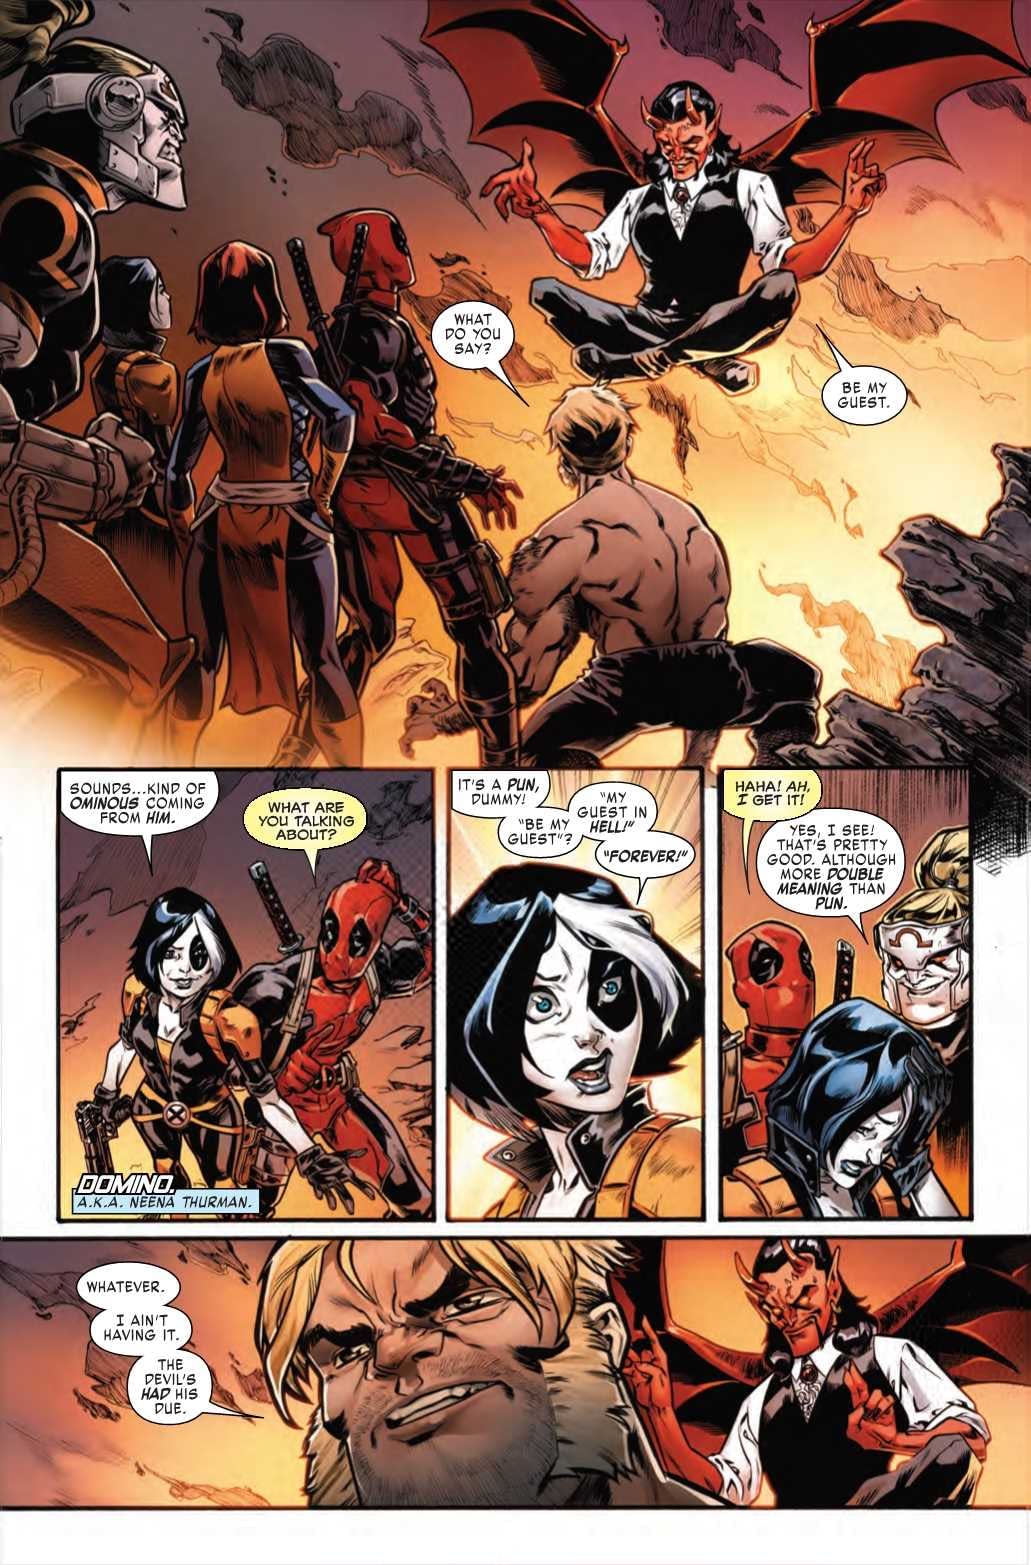 Domino Explains the Joke in Next Week's Weapon X #27